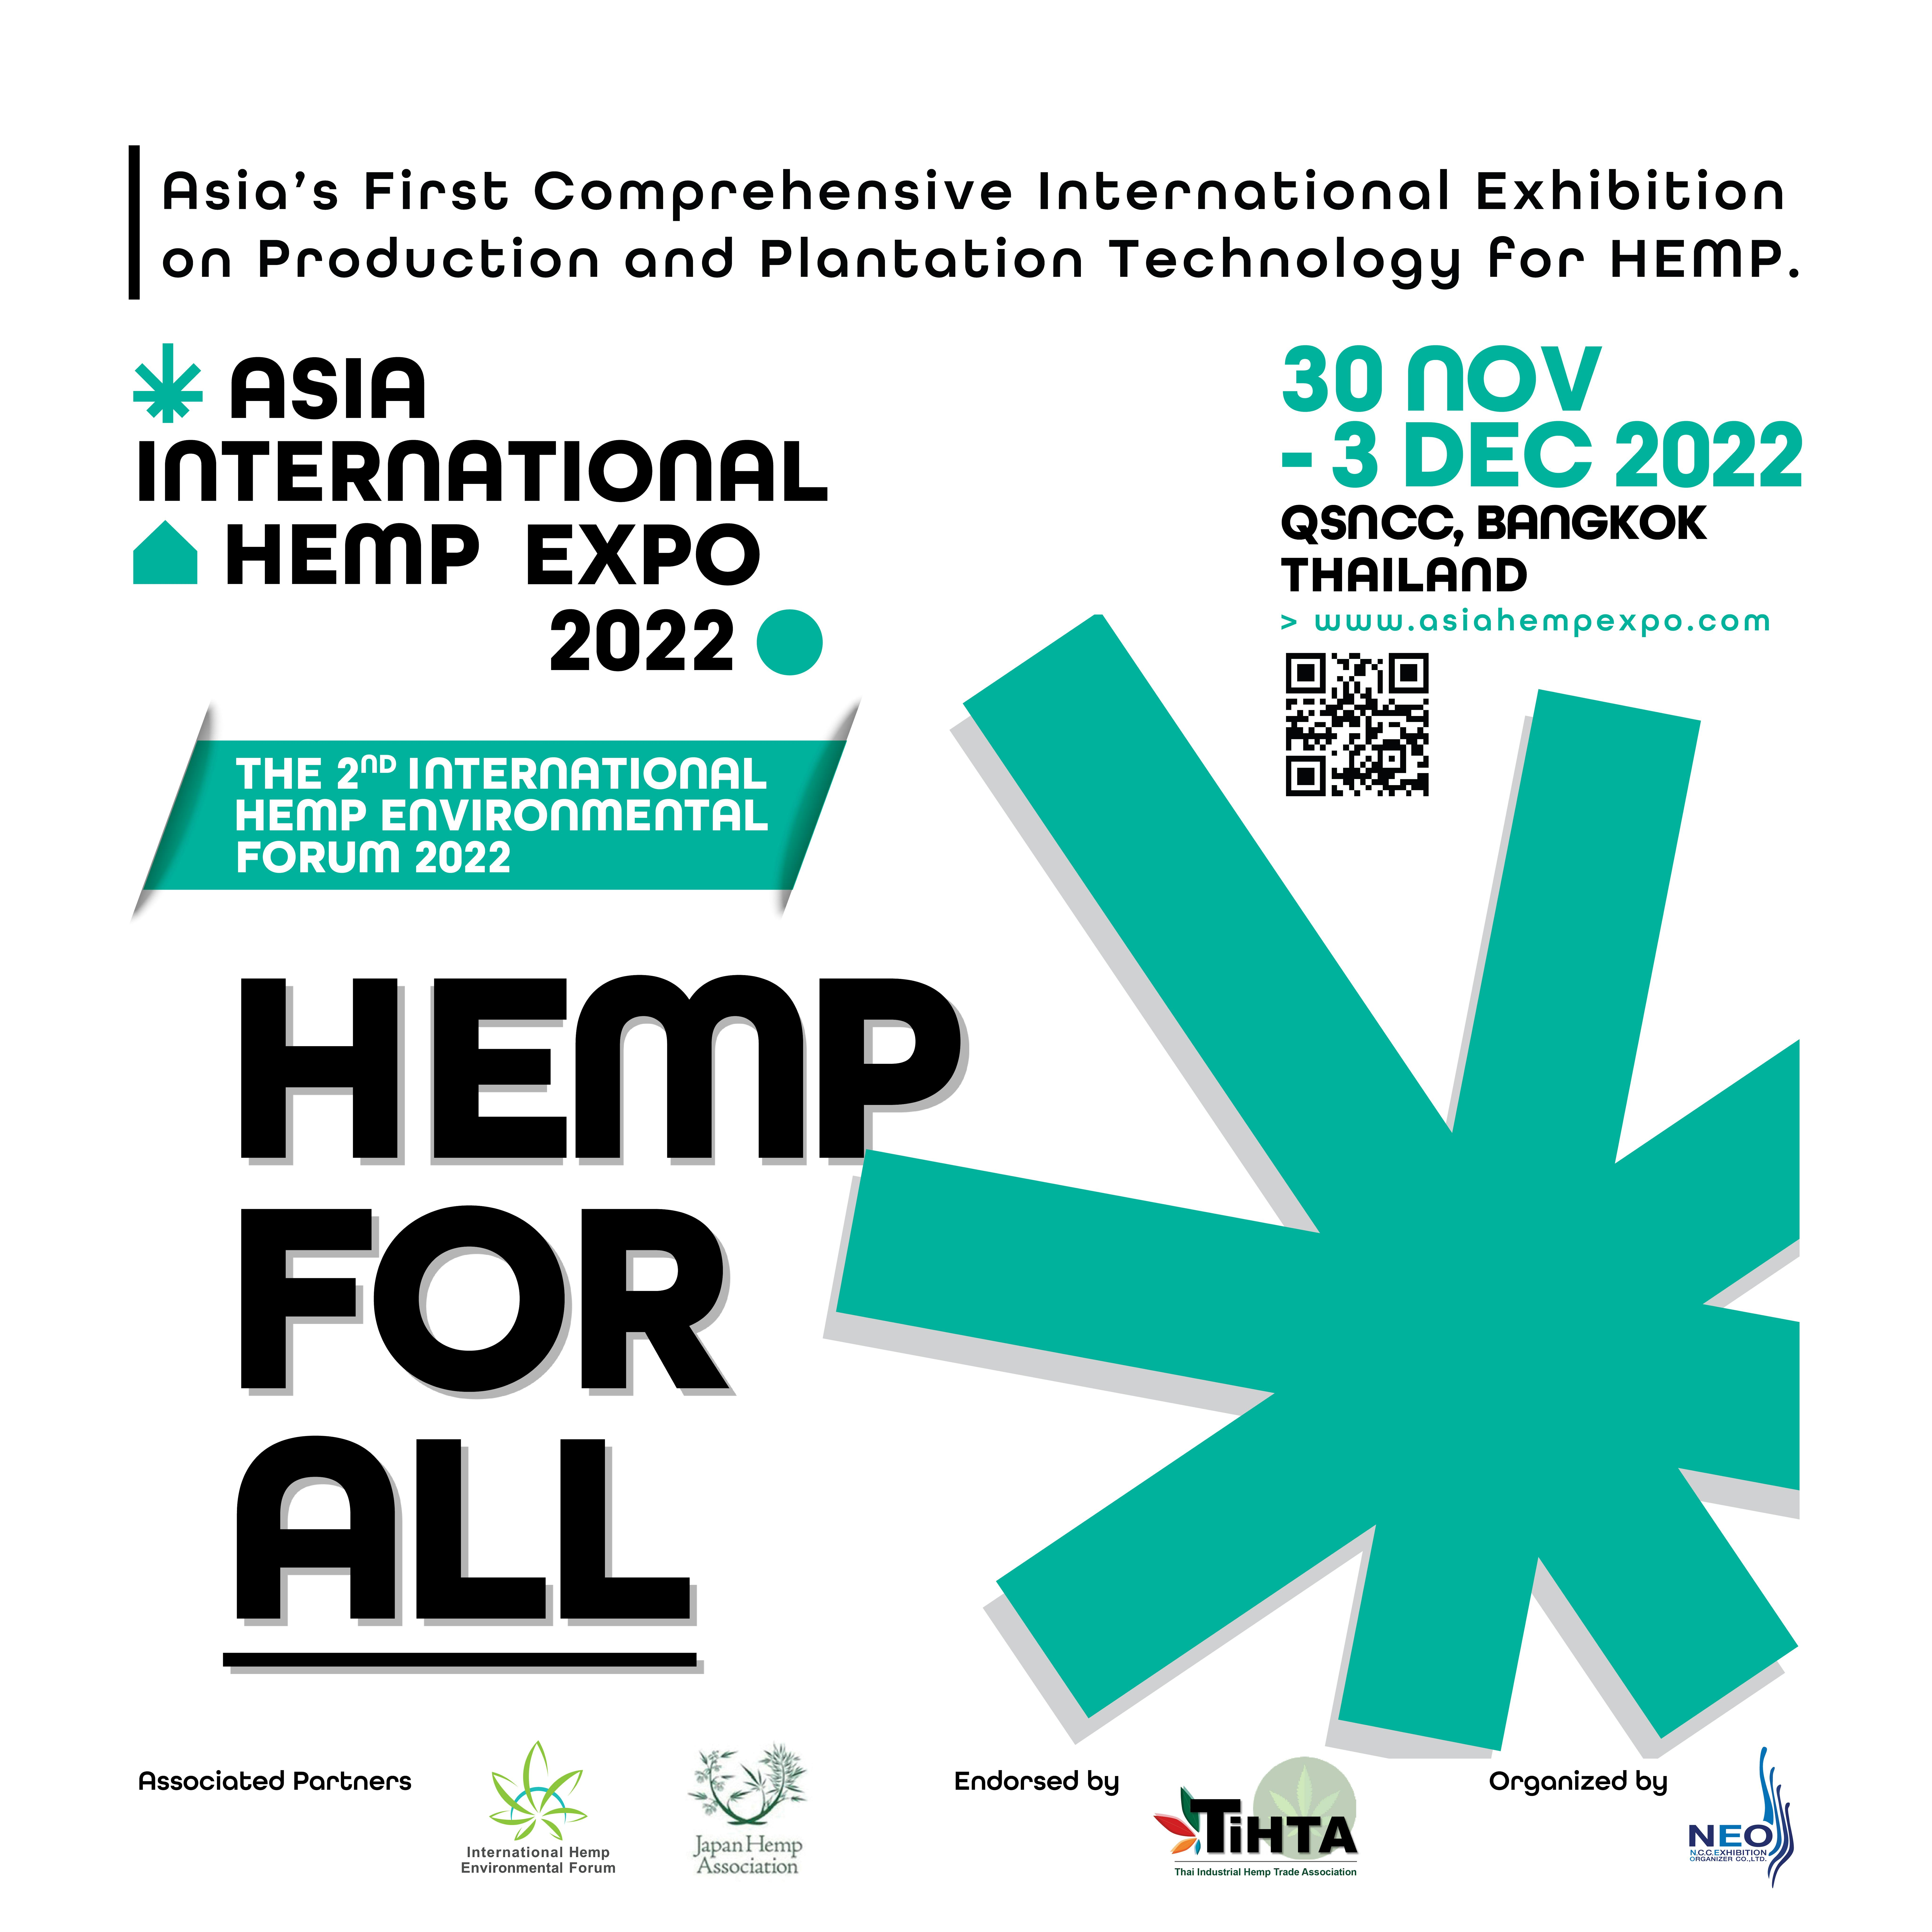 Asia International Hemp Expo 2022